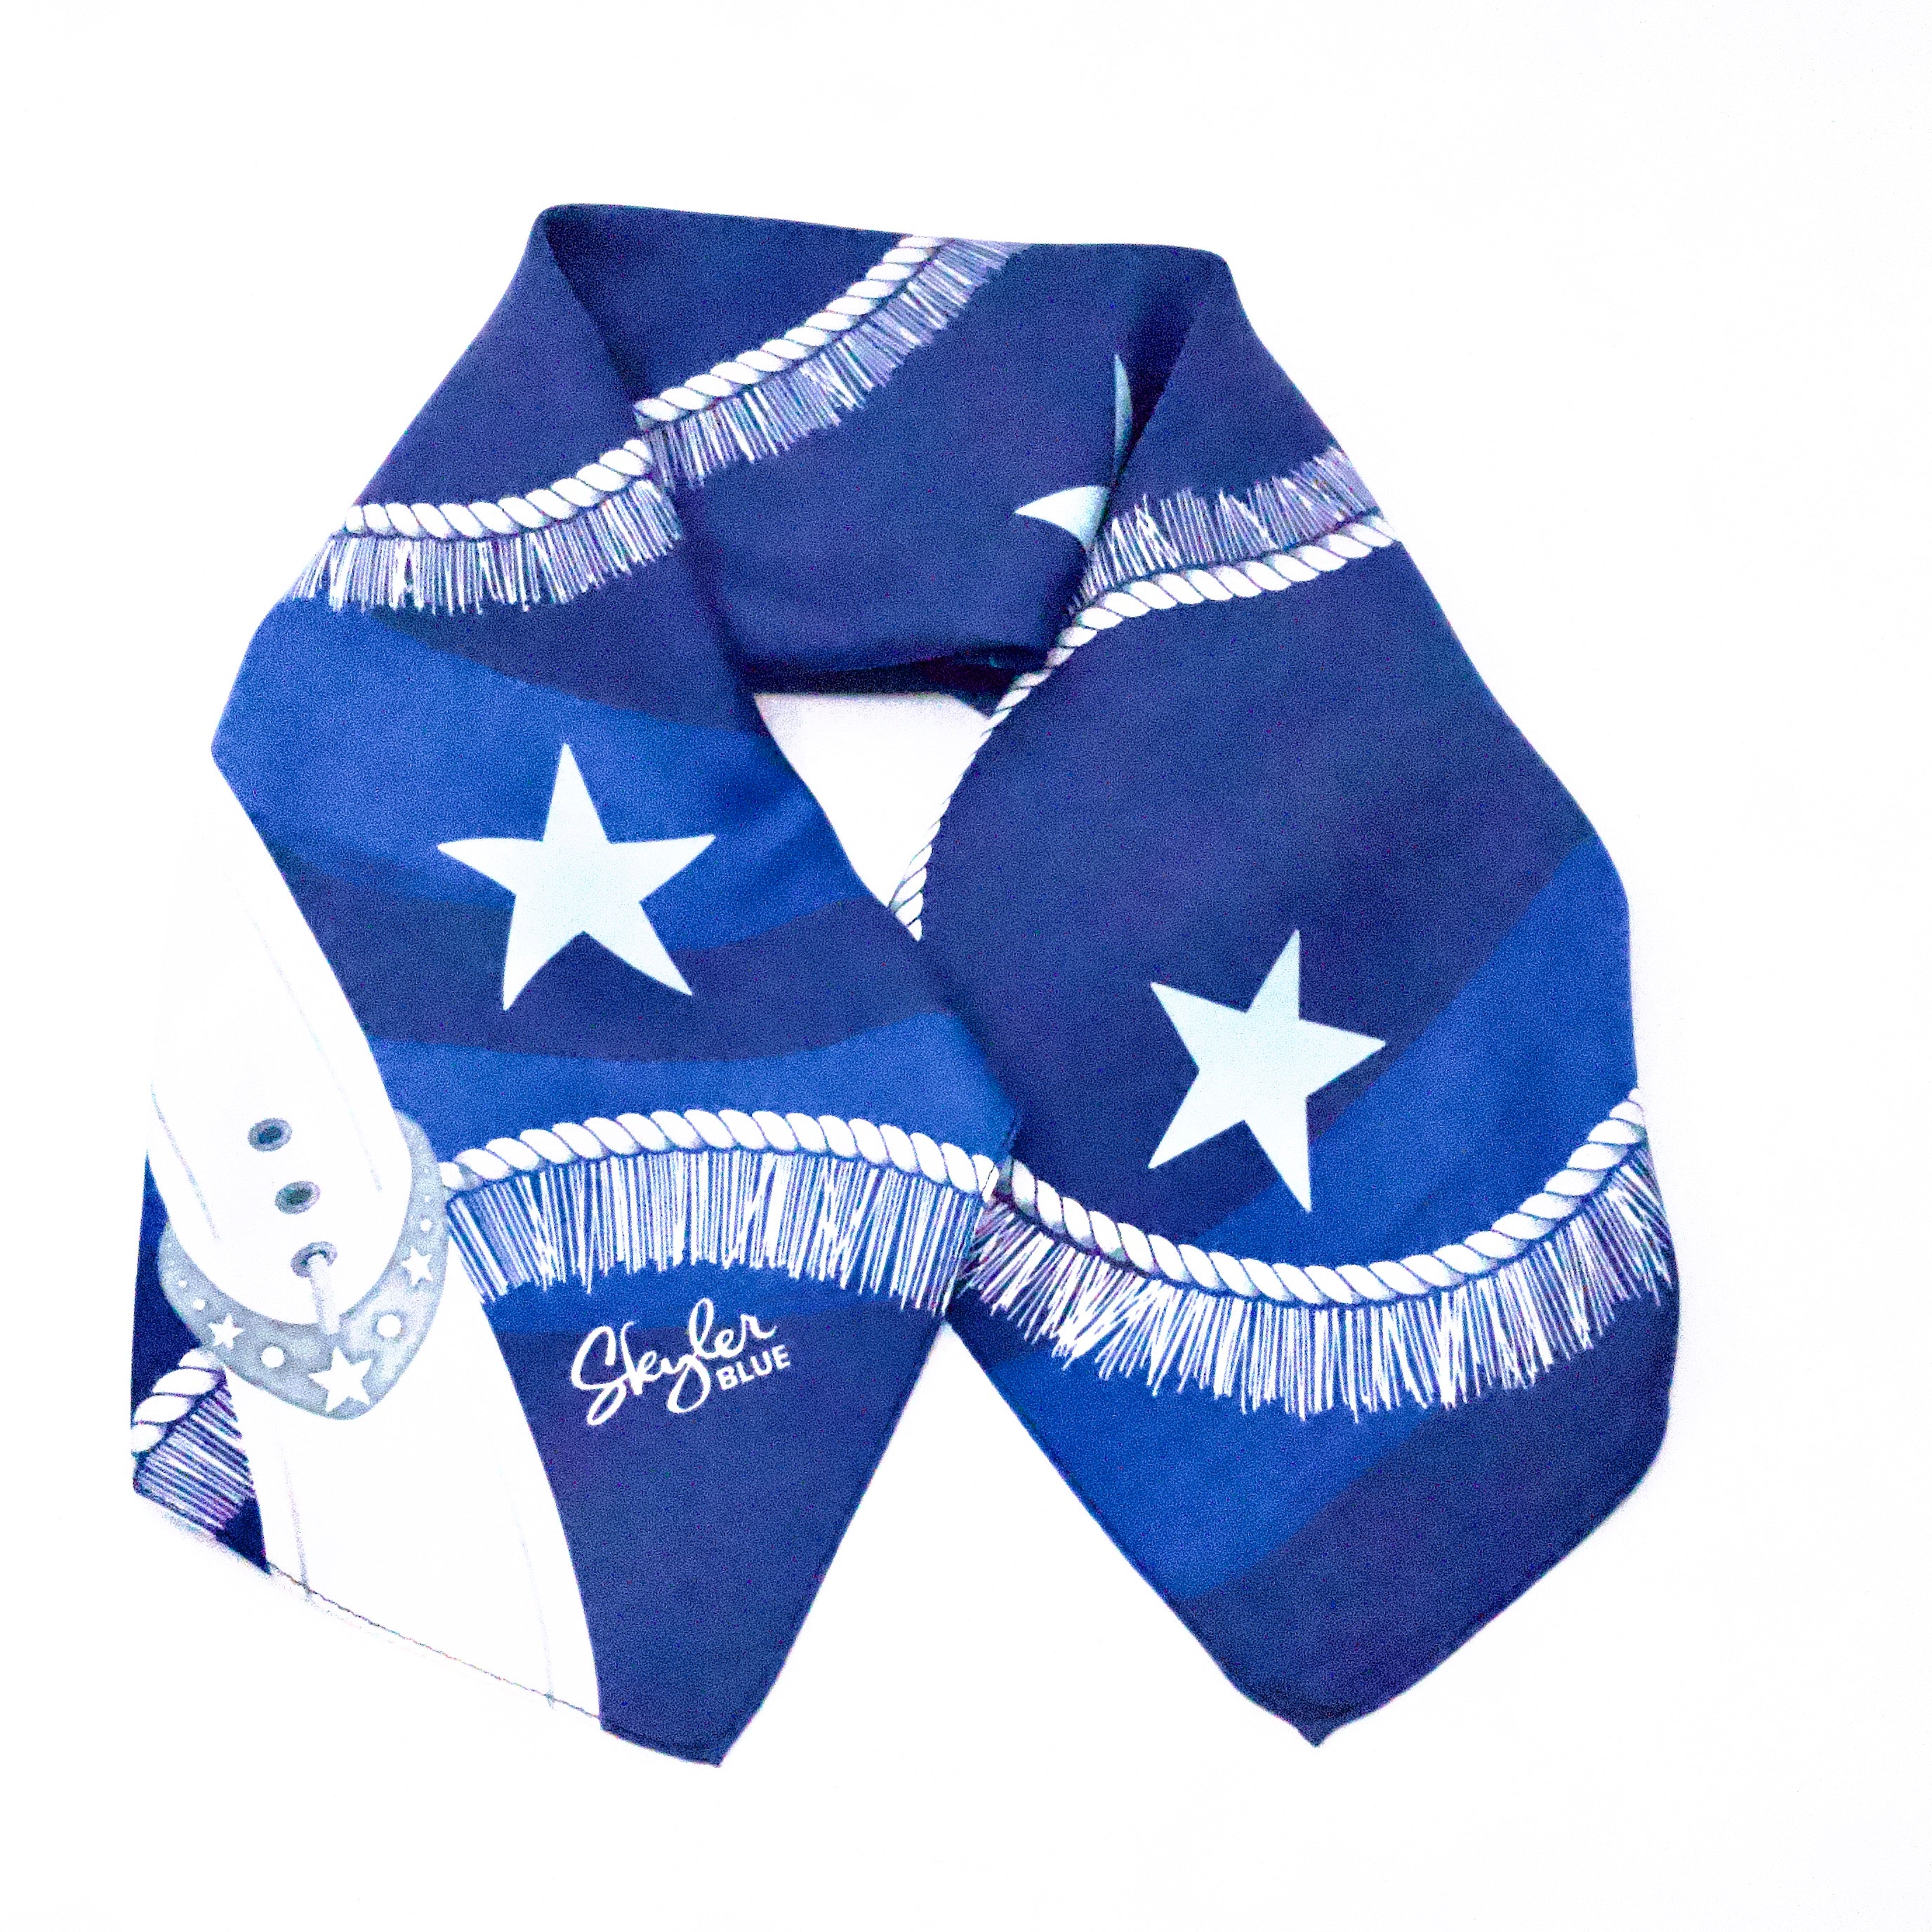 Skyler Blue’s The Dallas 002 60-centimeter 100% silk twill scarf